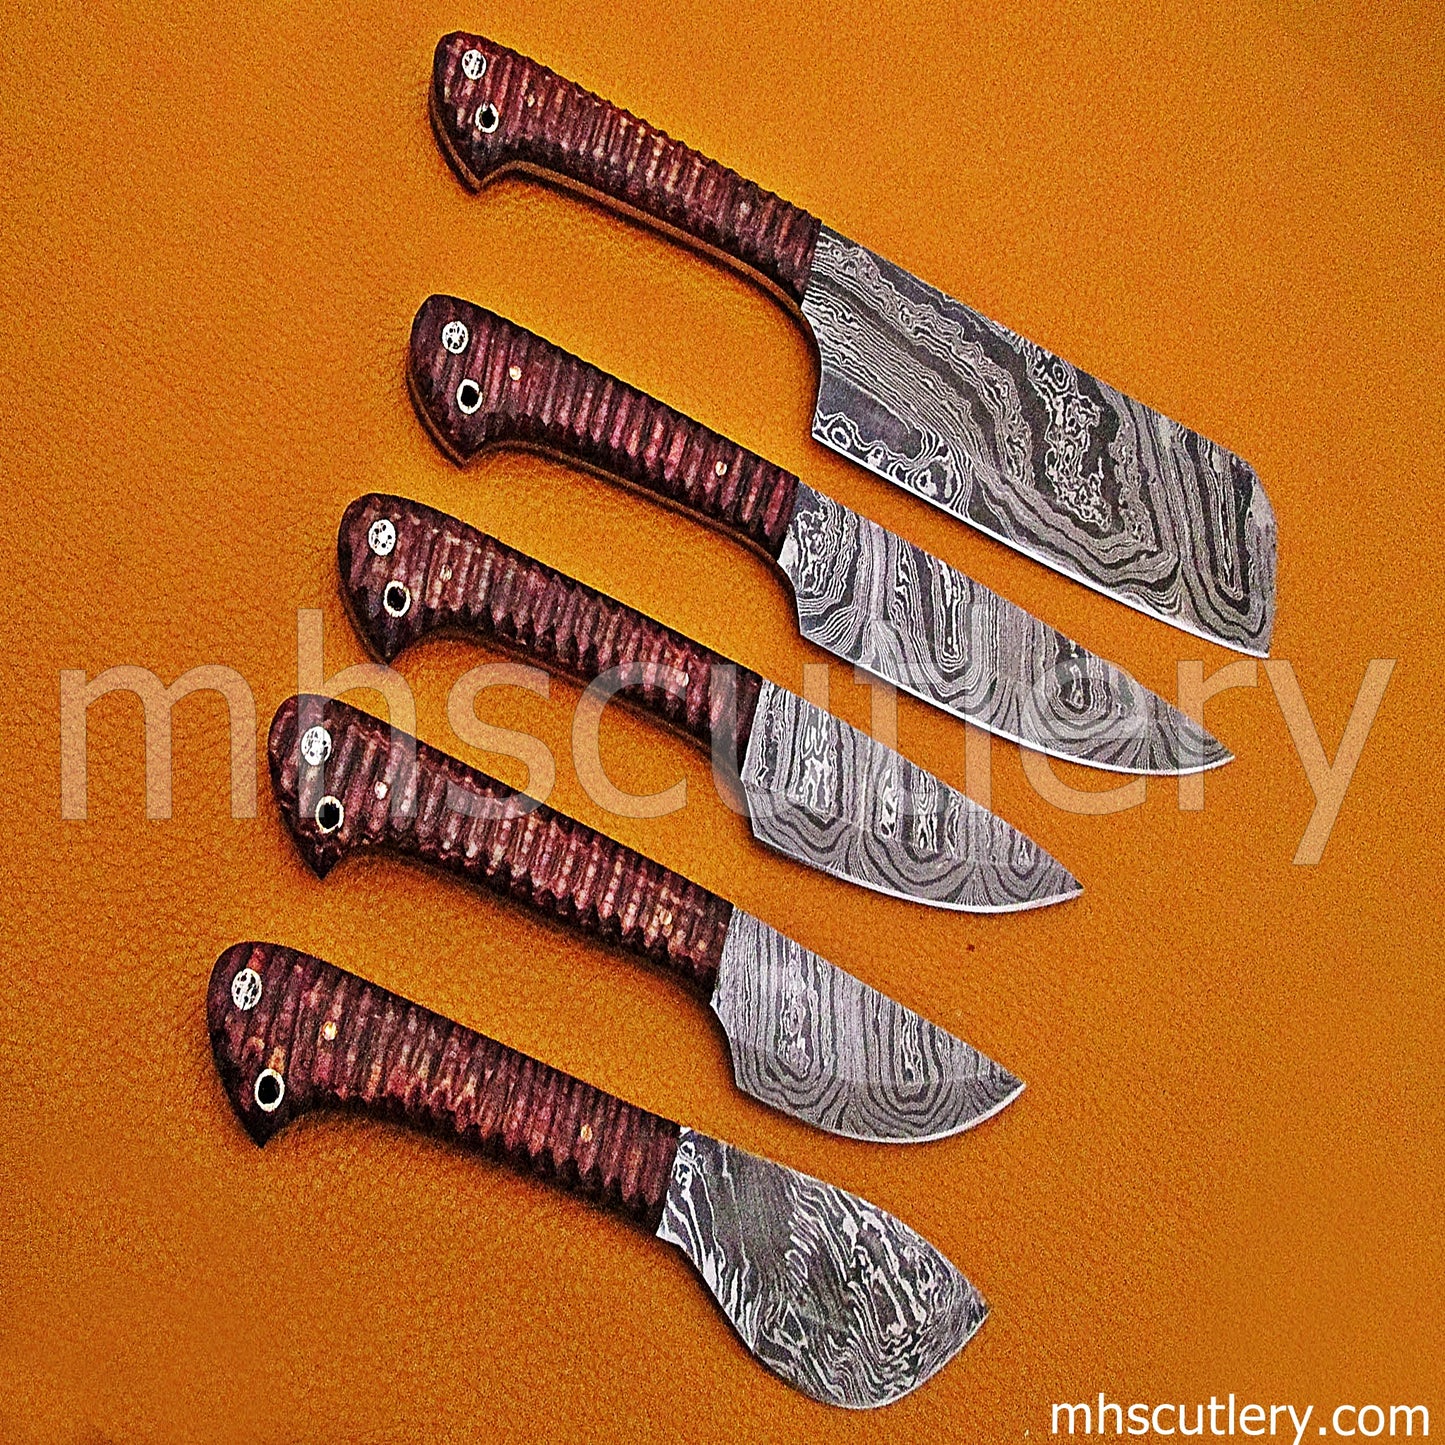 Damascus Steel Chef Knife Set / 5 Pcs | mhscutlery